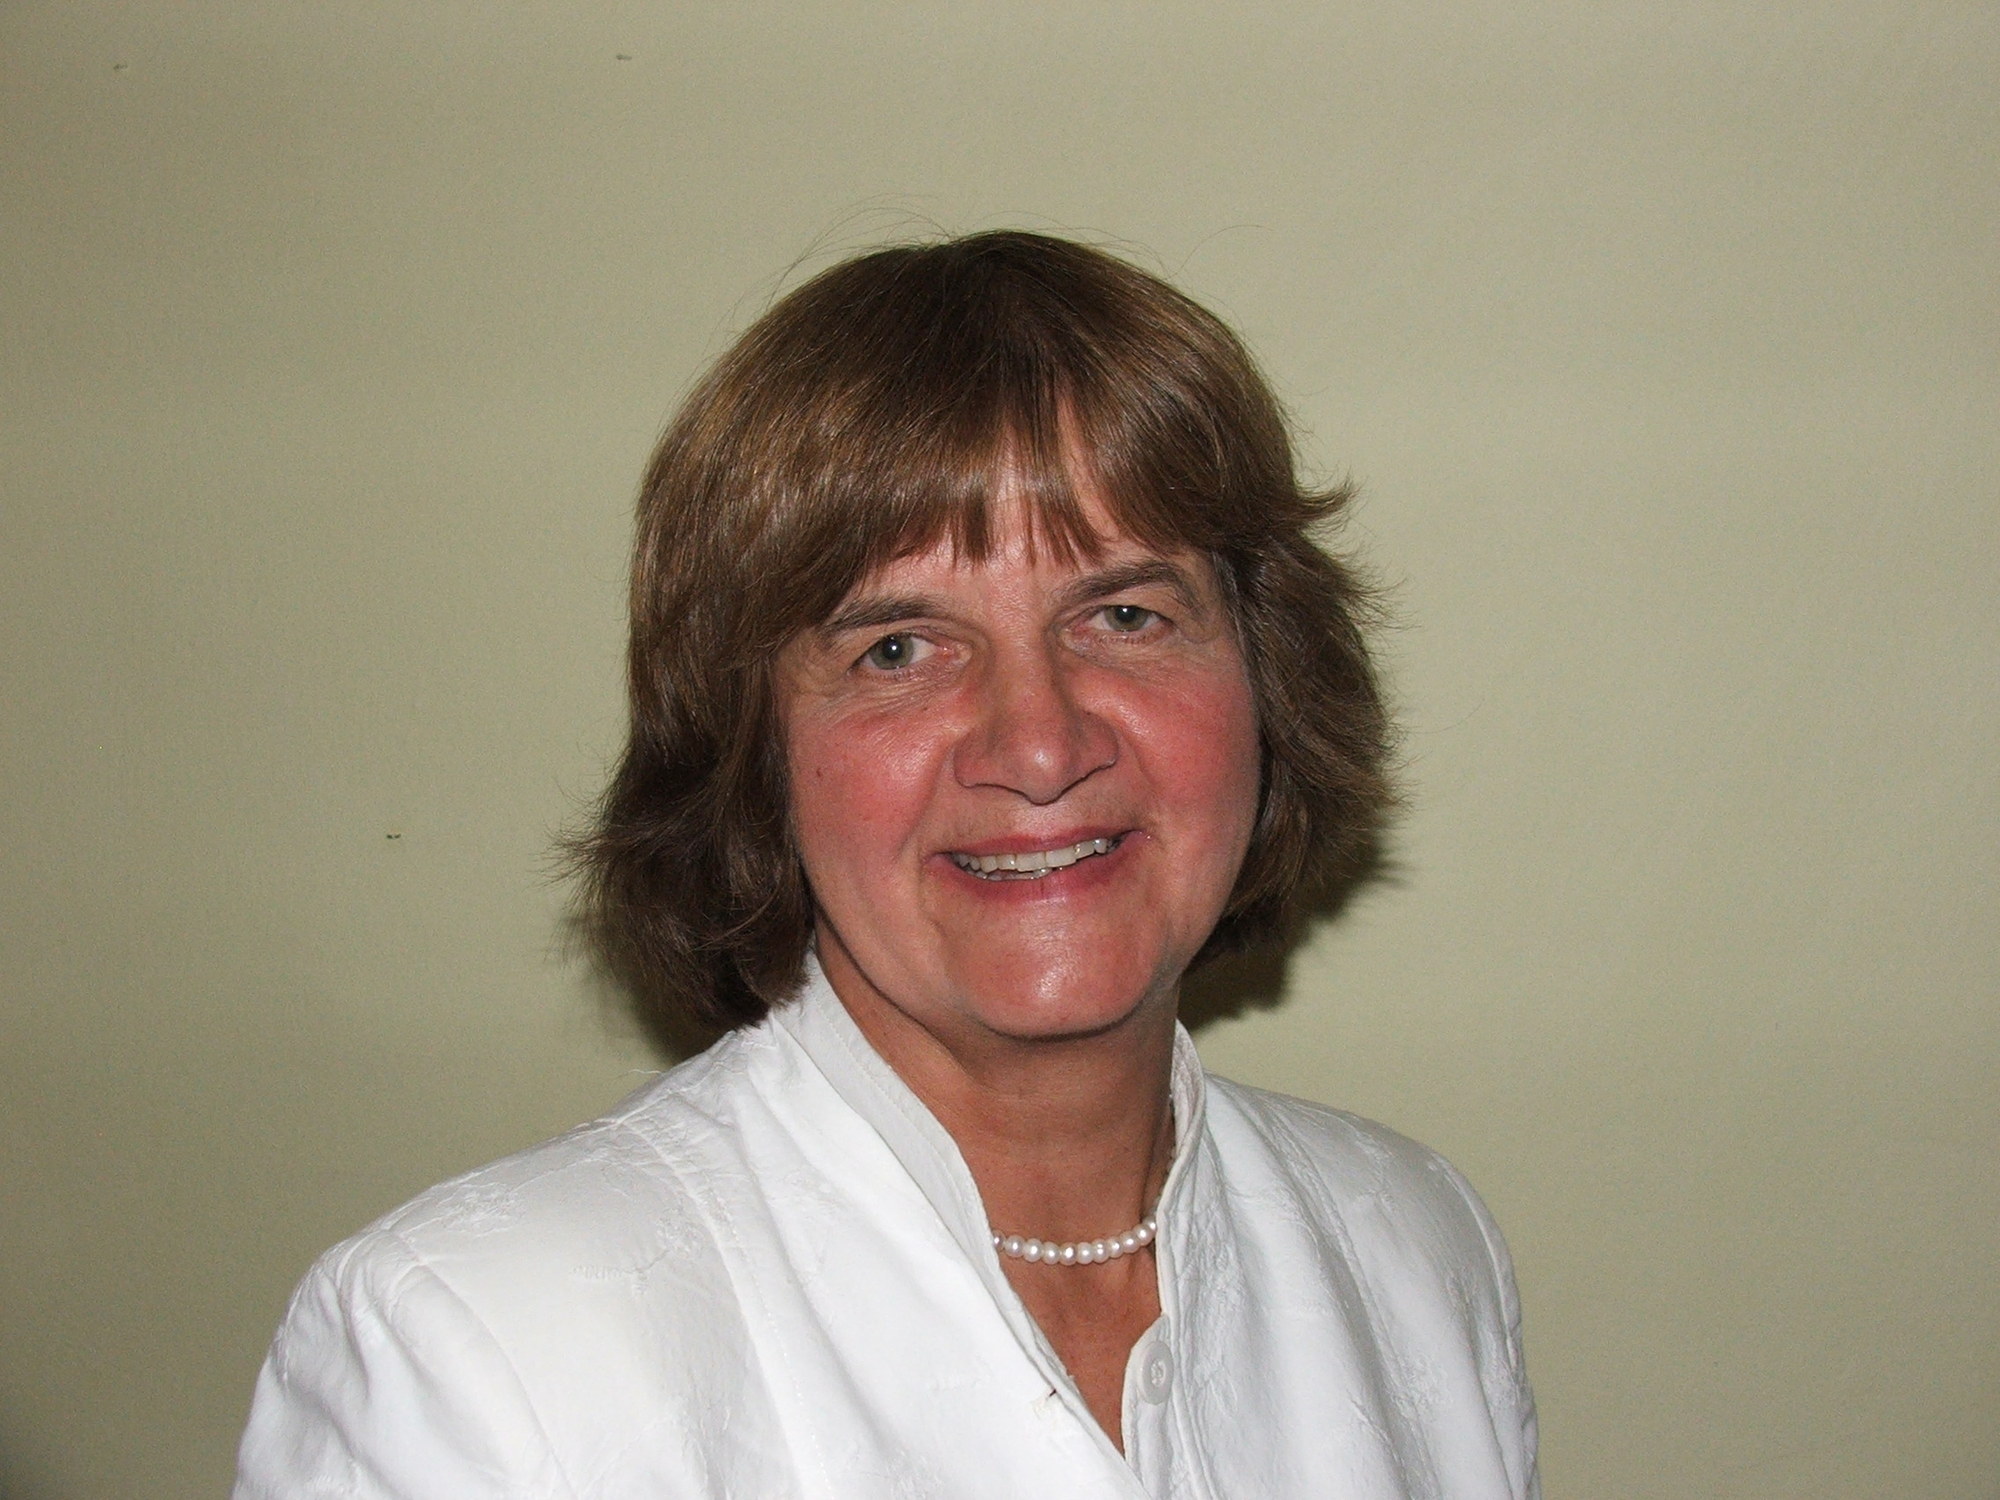 Anna Midelfart in 2008